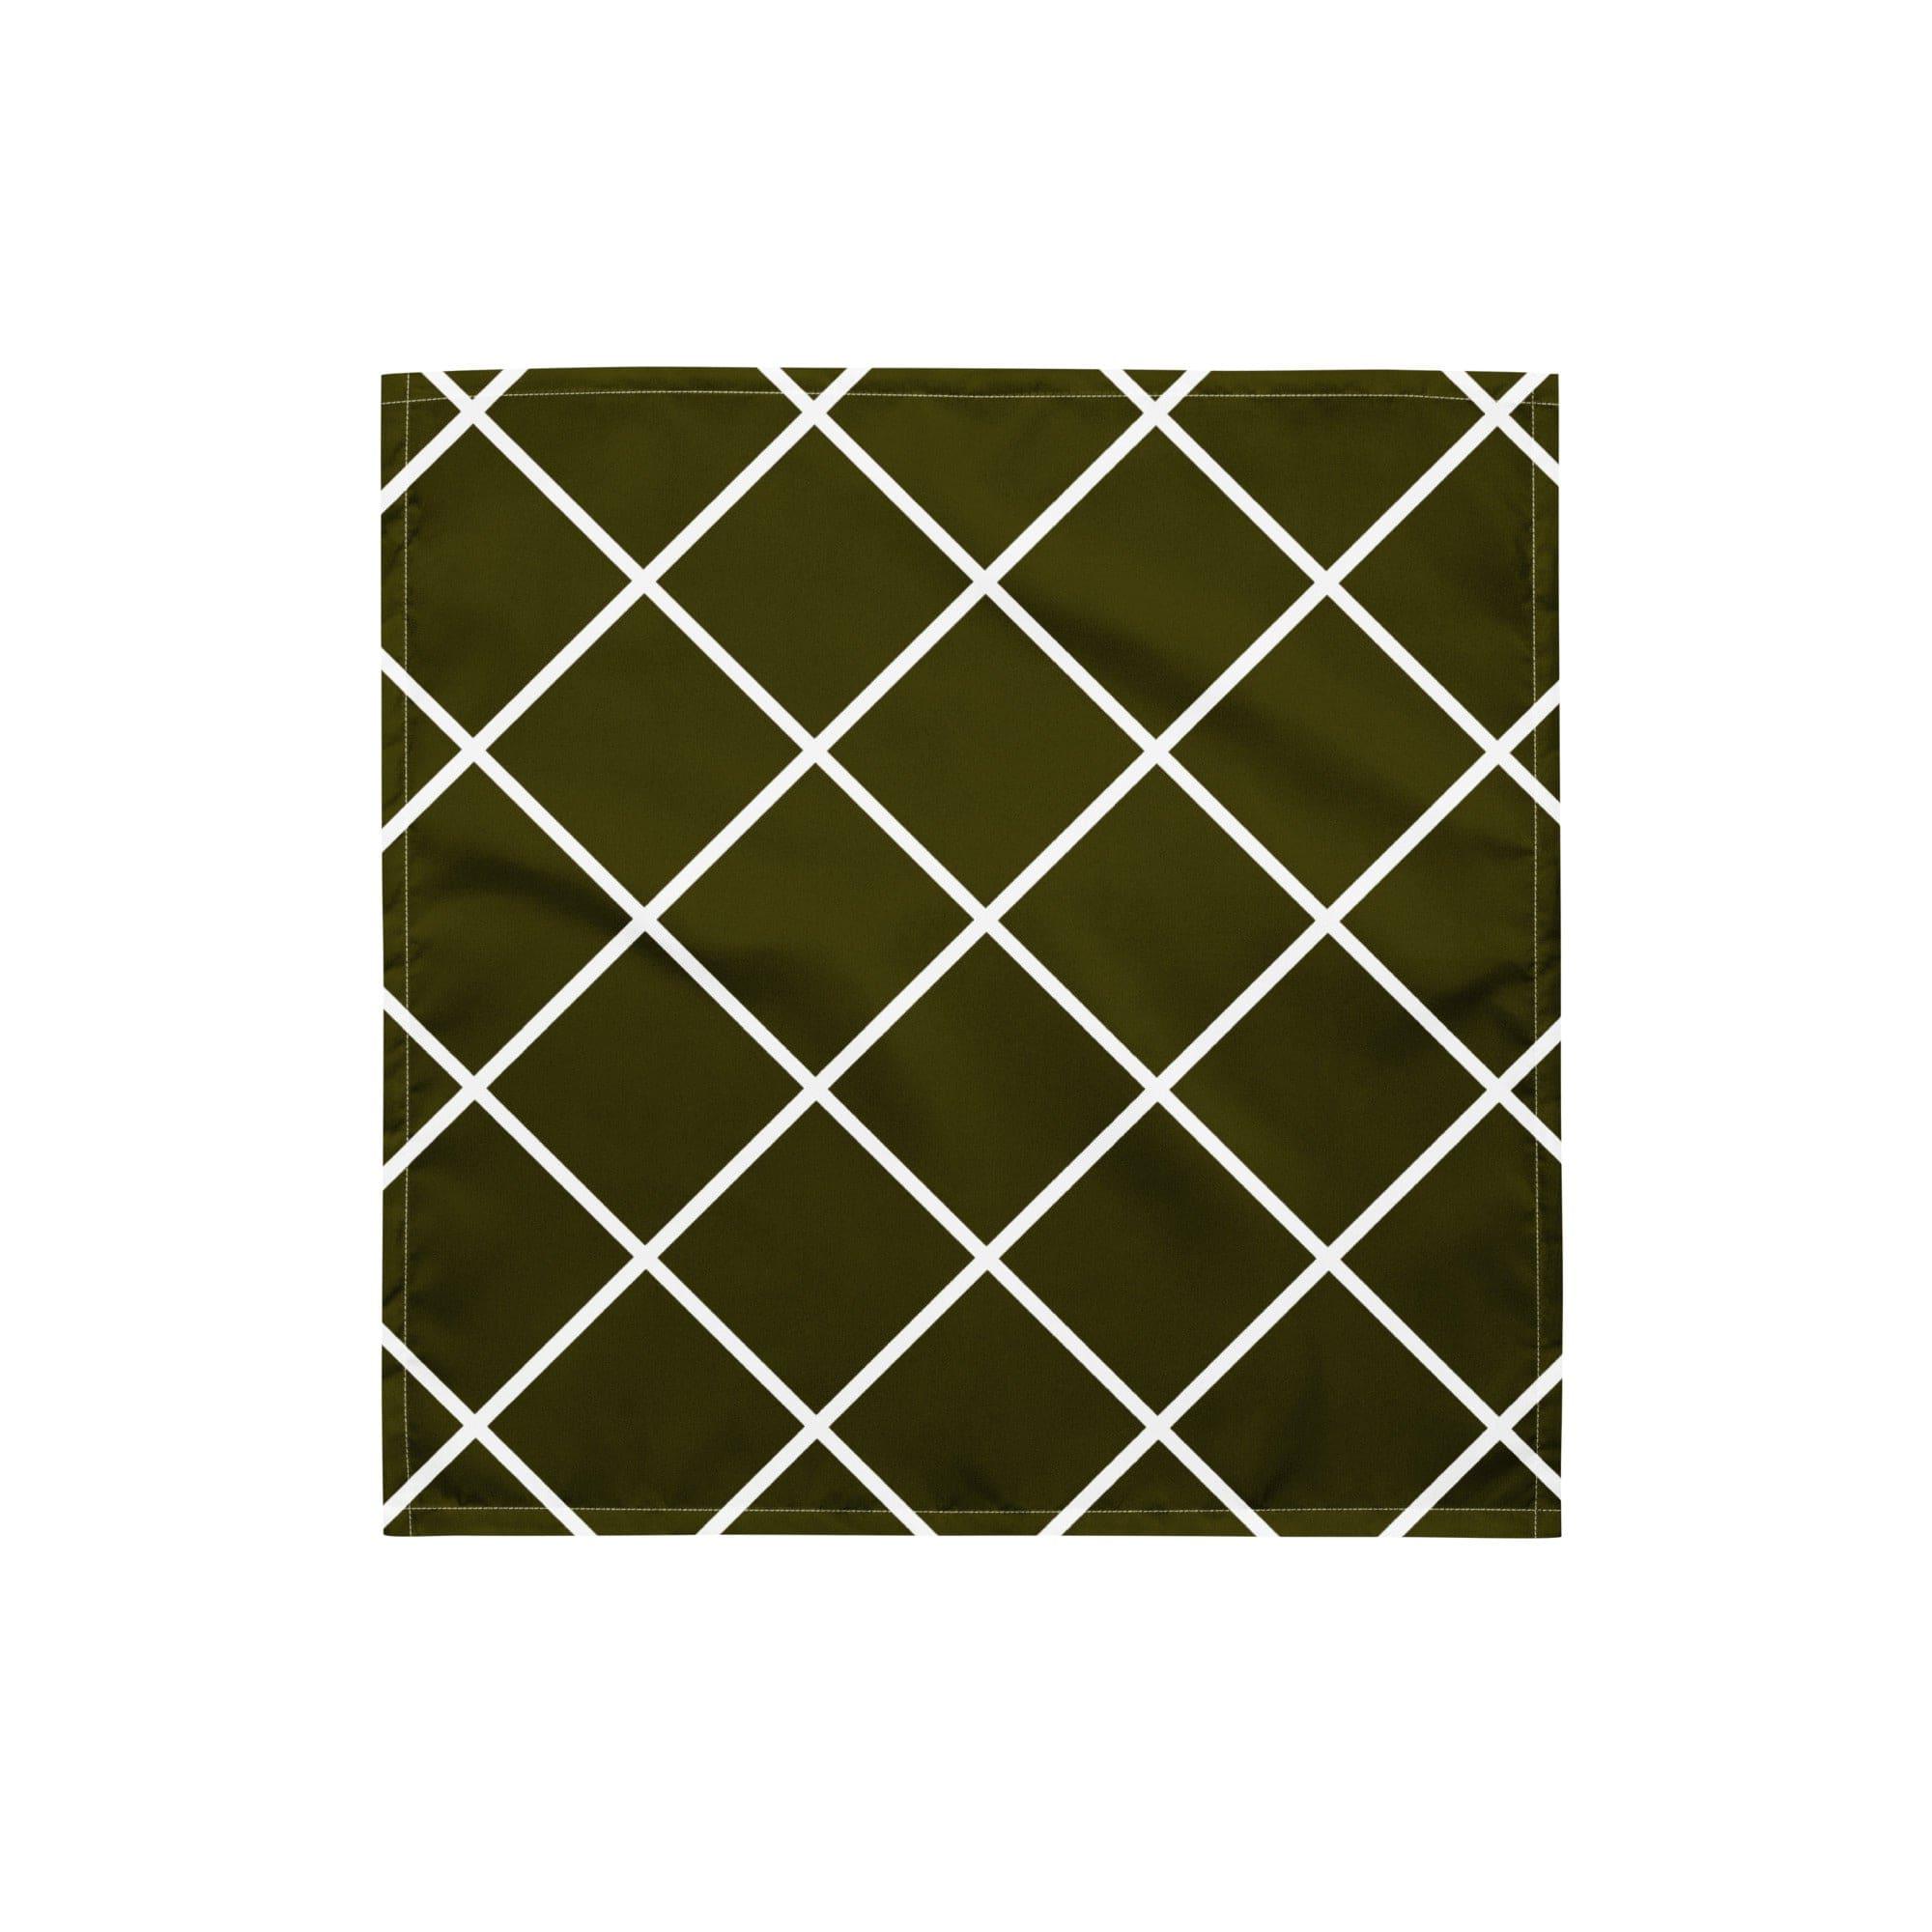 Designer Bandana White and Brown Geometric Triangle Pattern Luxury Neck Scarf - TopKoalaTee